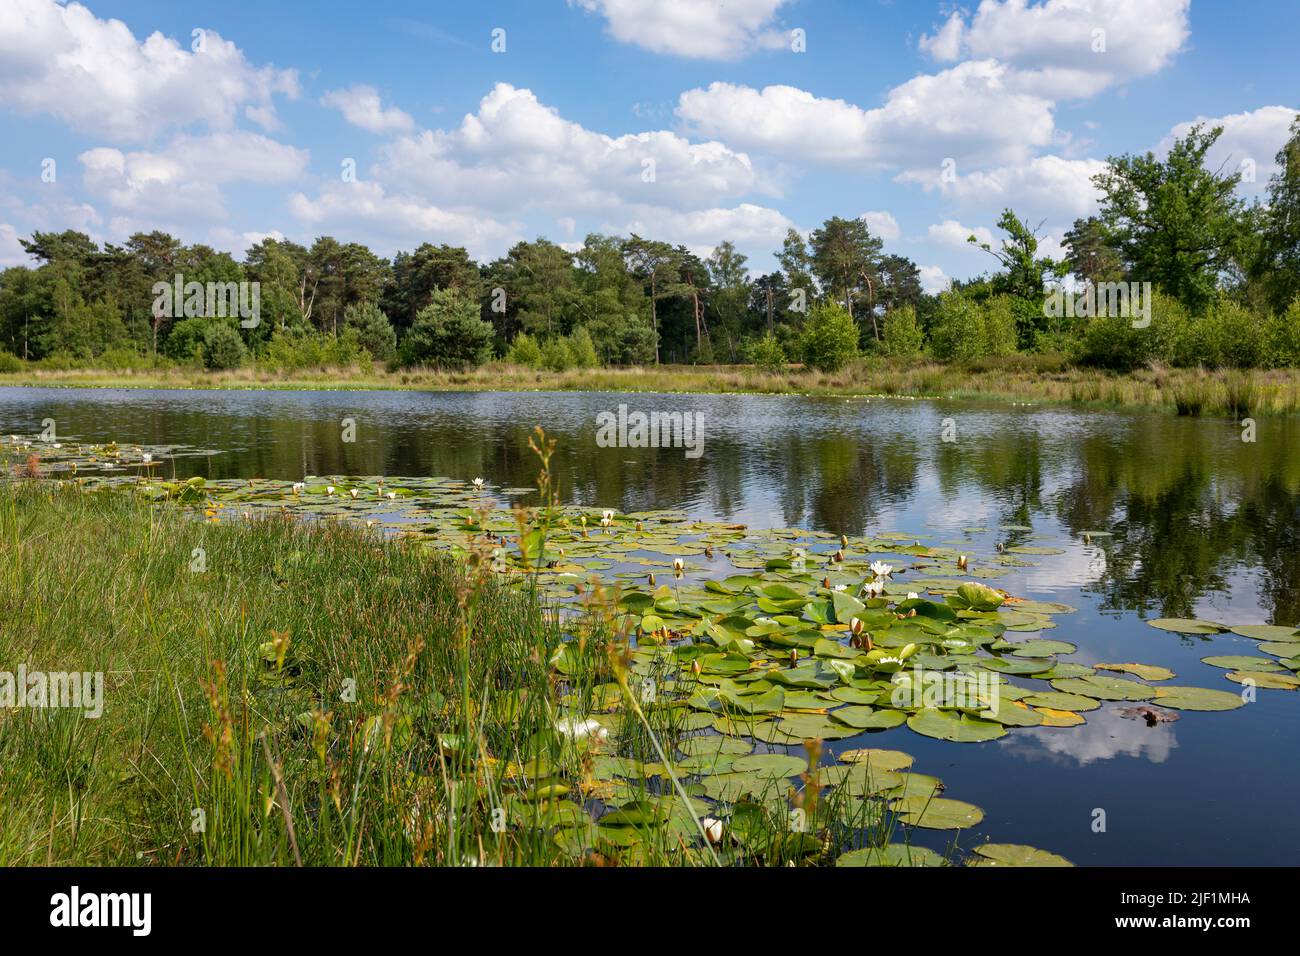 Lake at National Park 'Maasduinen' in Noord-Limburg, the Netherlands Stock Photo